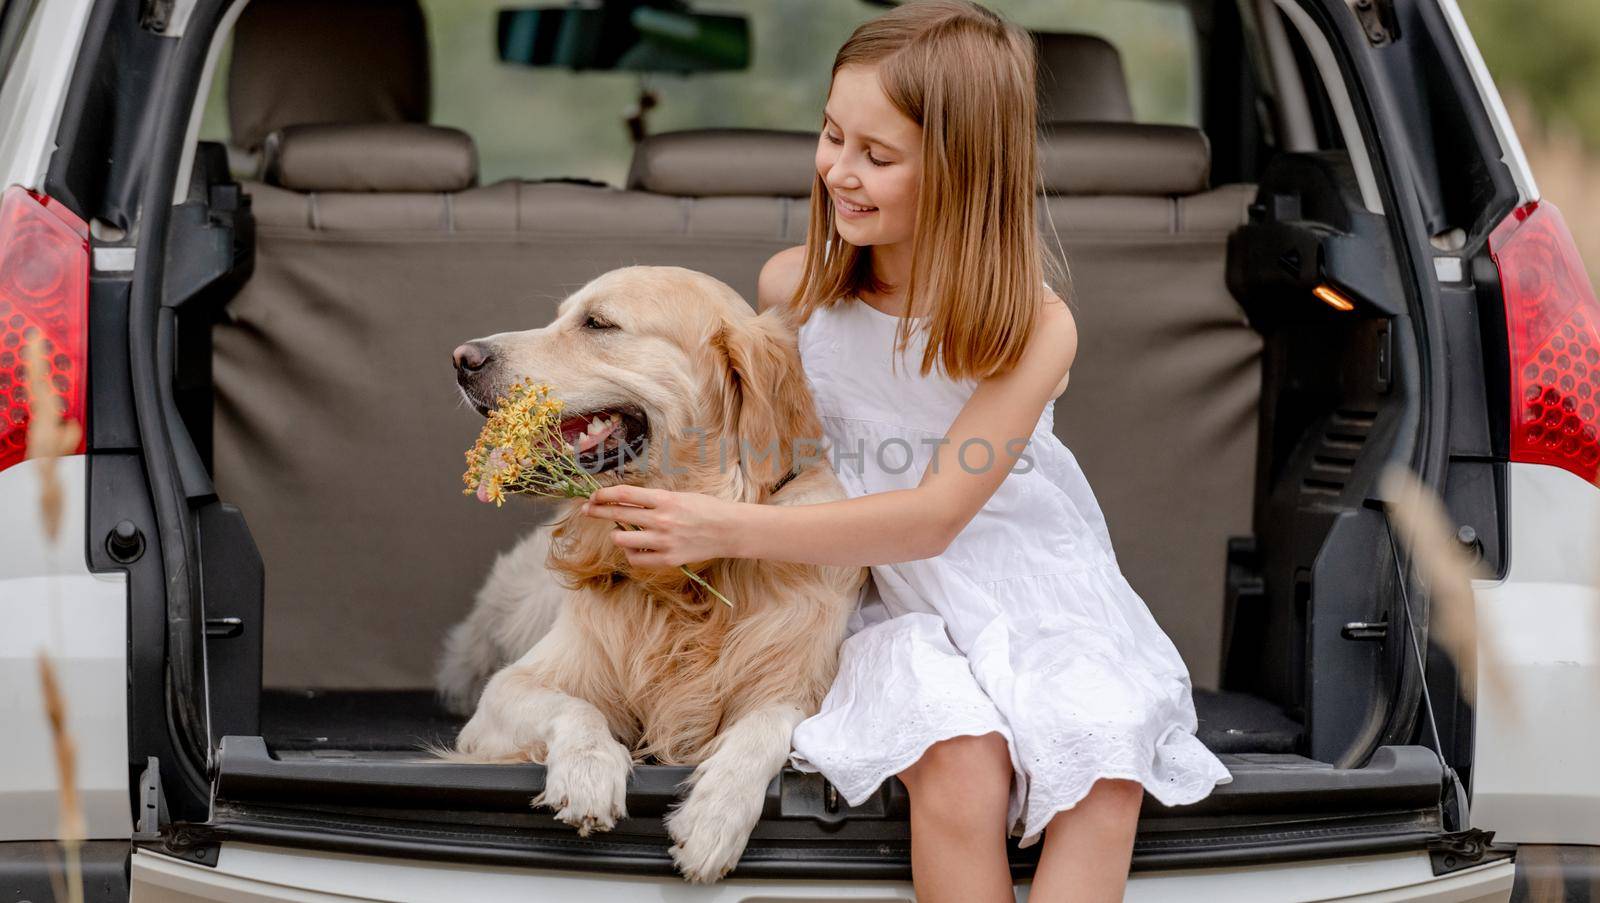 Preteen girl with golden retriever dog in car trunk by tan4ikk1